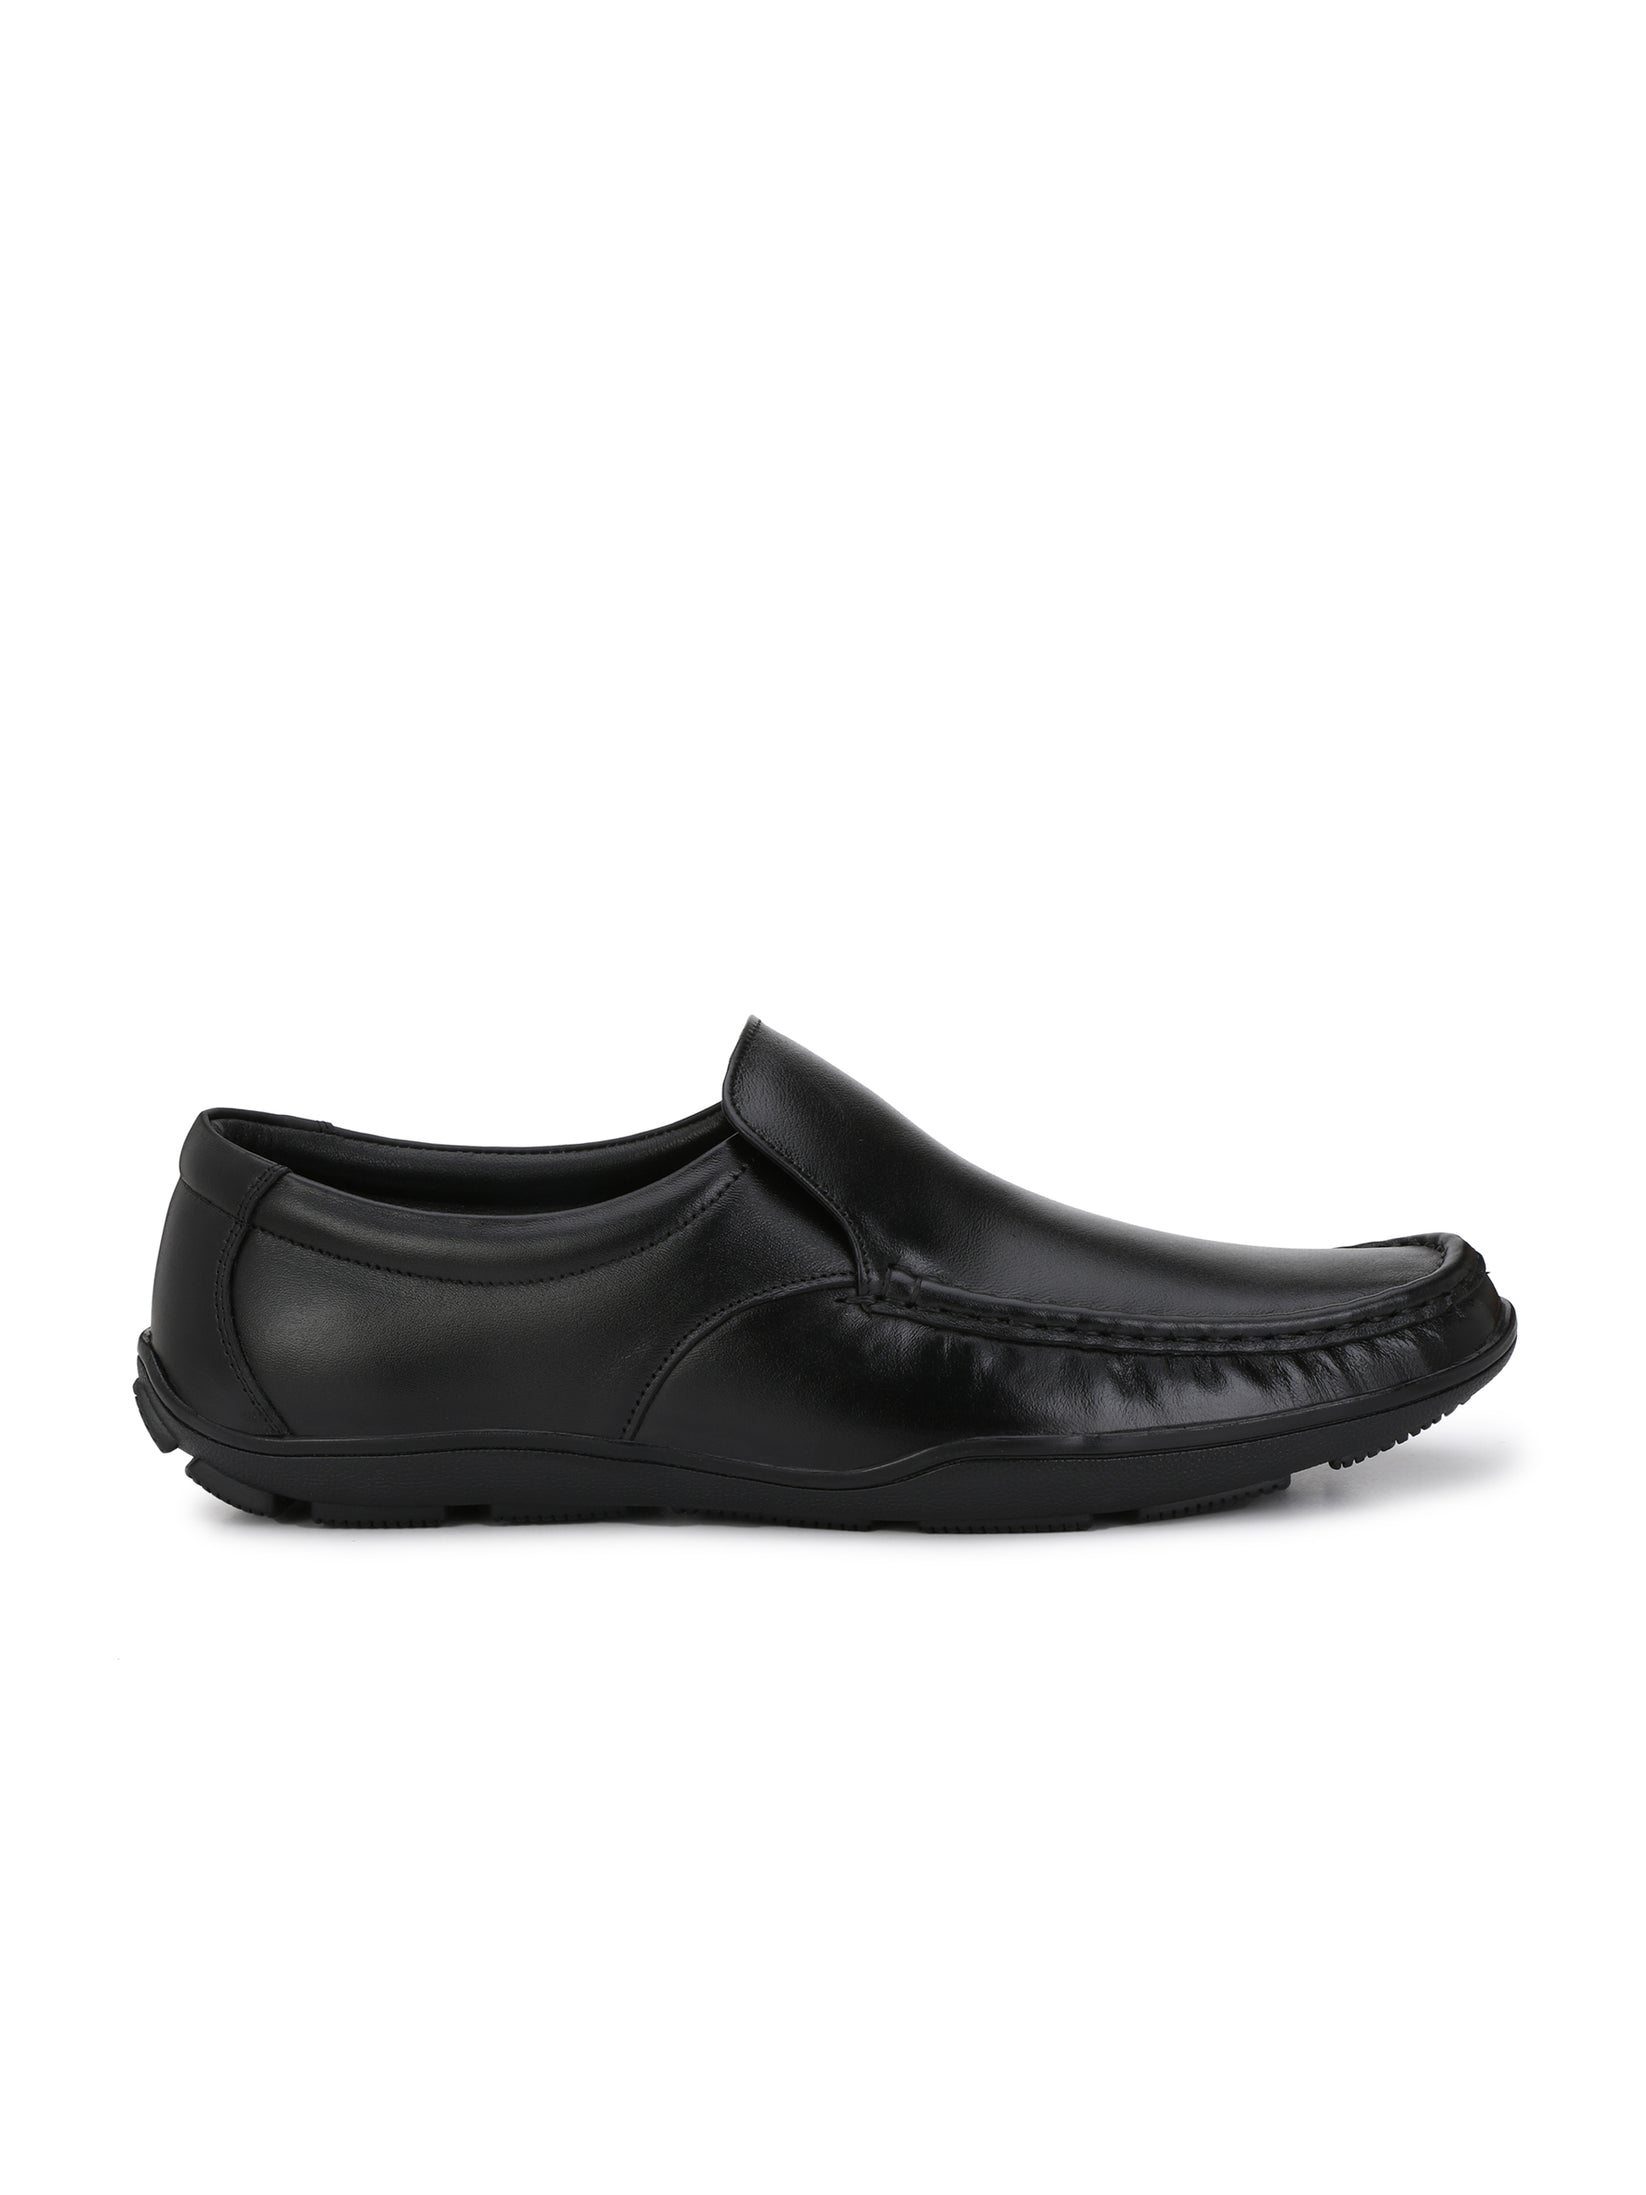 Fentacia Men Black Genuine Leather Formal Shoes#N# – Fentacia Footwear